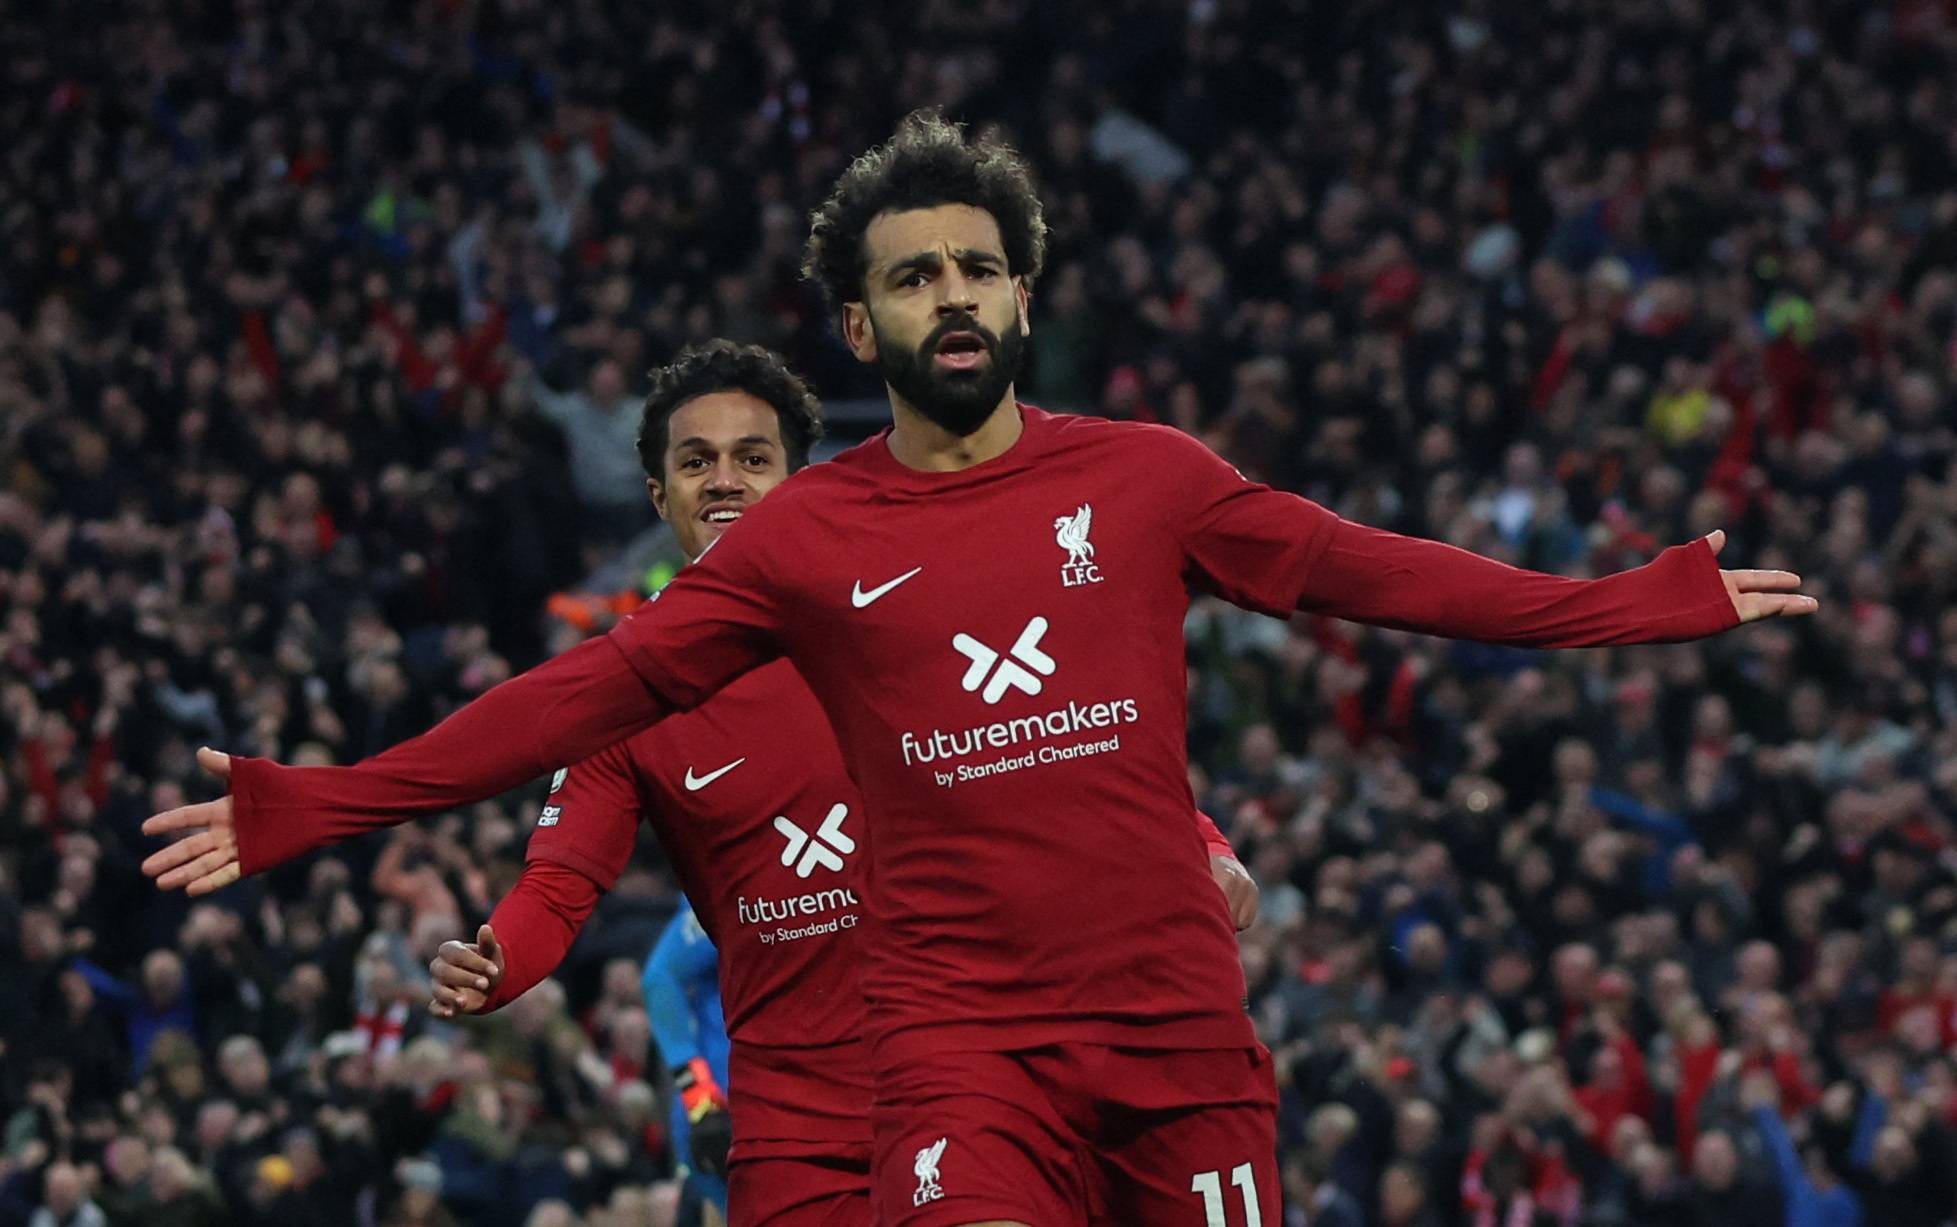 Liverpool star Mohamed Salah celebrates